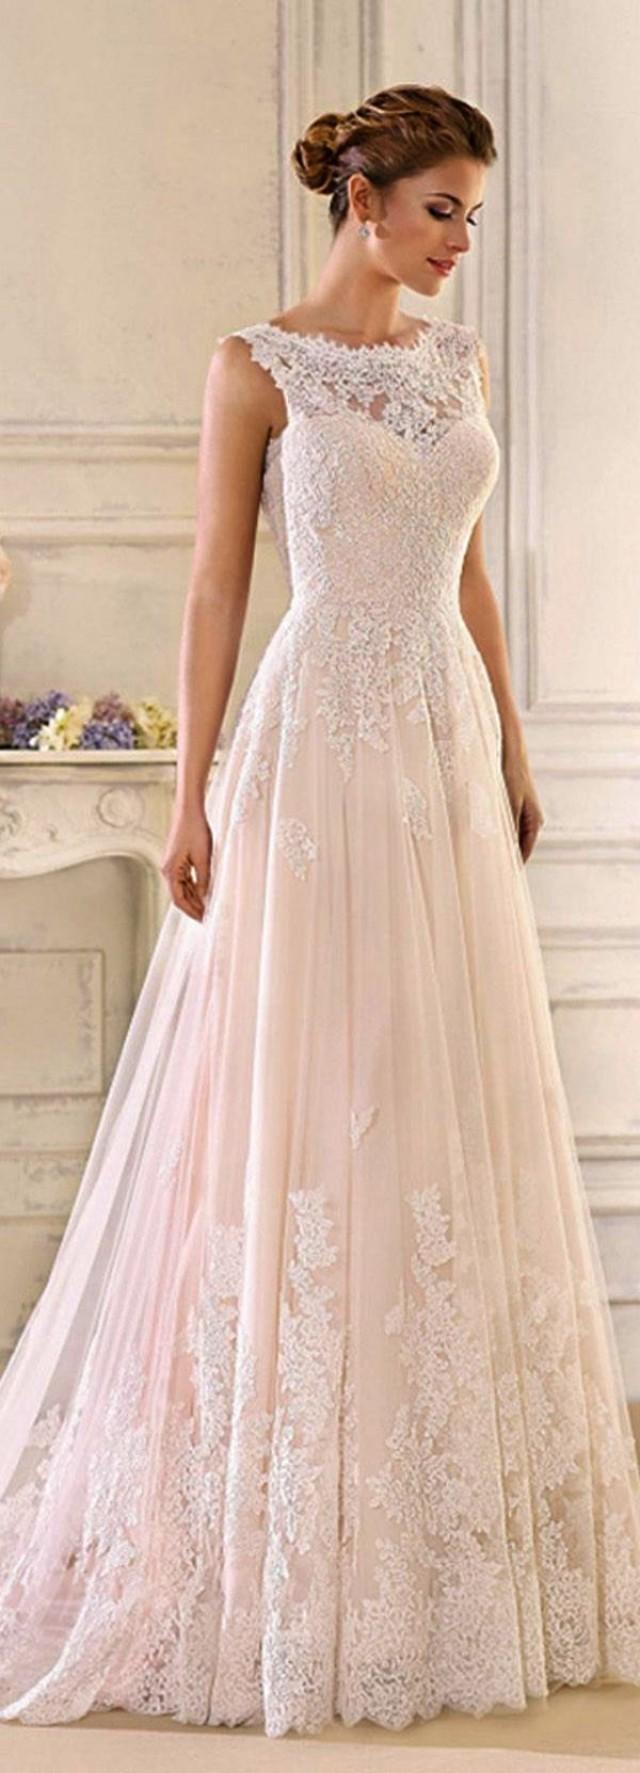 Wonderful... Lace Mermaid Wedding Dress With Cap Sleeves :) 